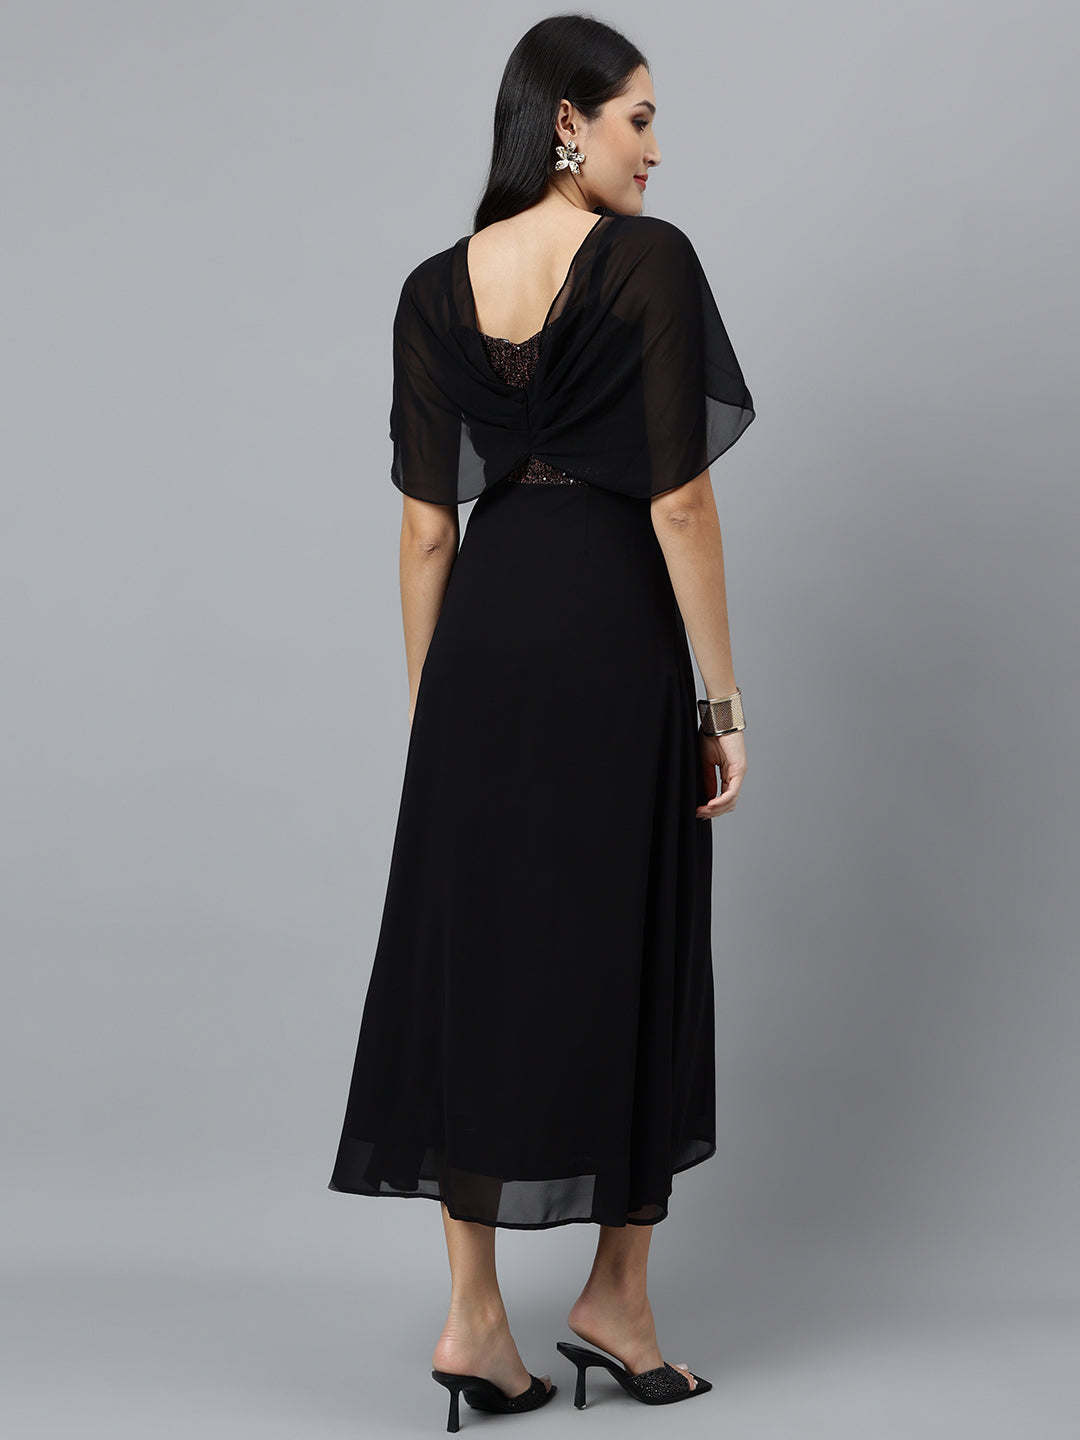 Black Solid Half Sleeve Party Maxi Dress